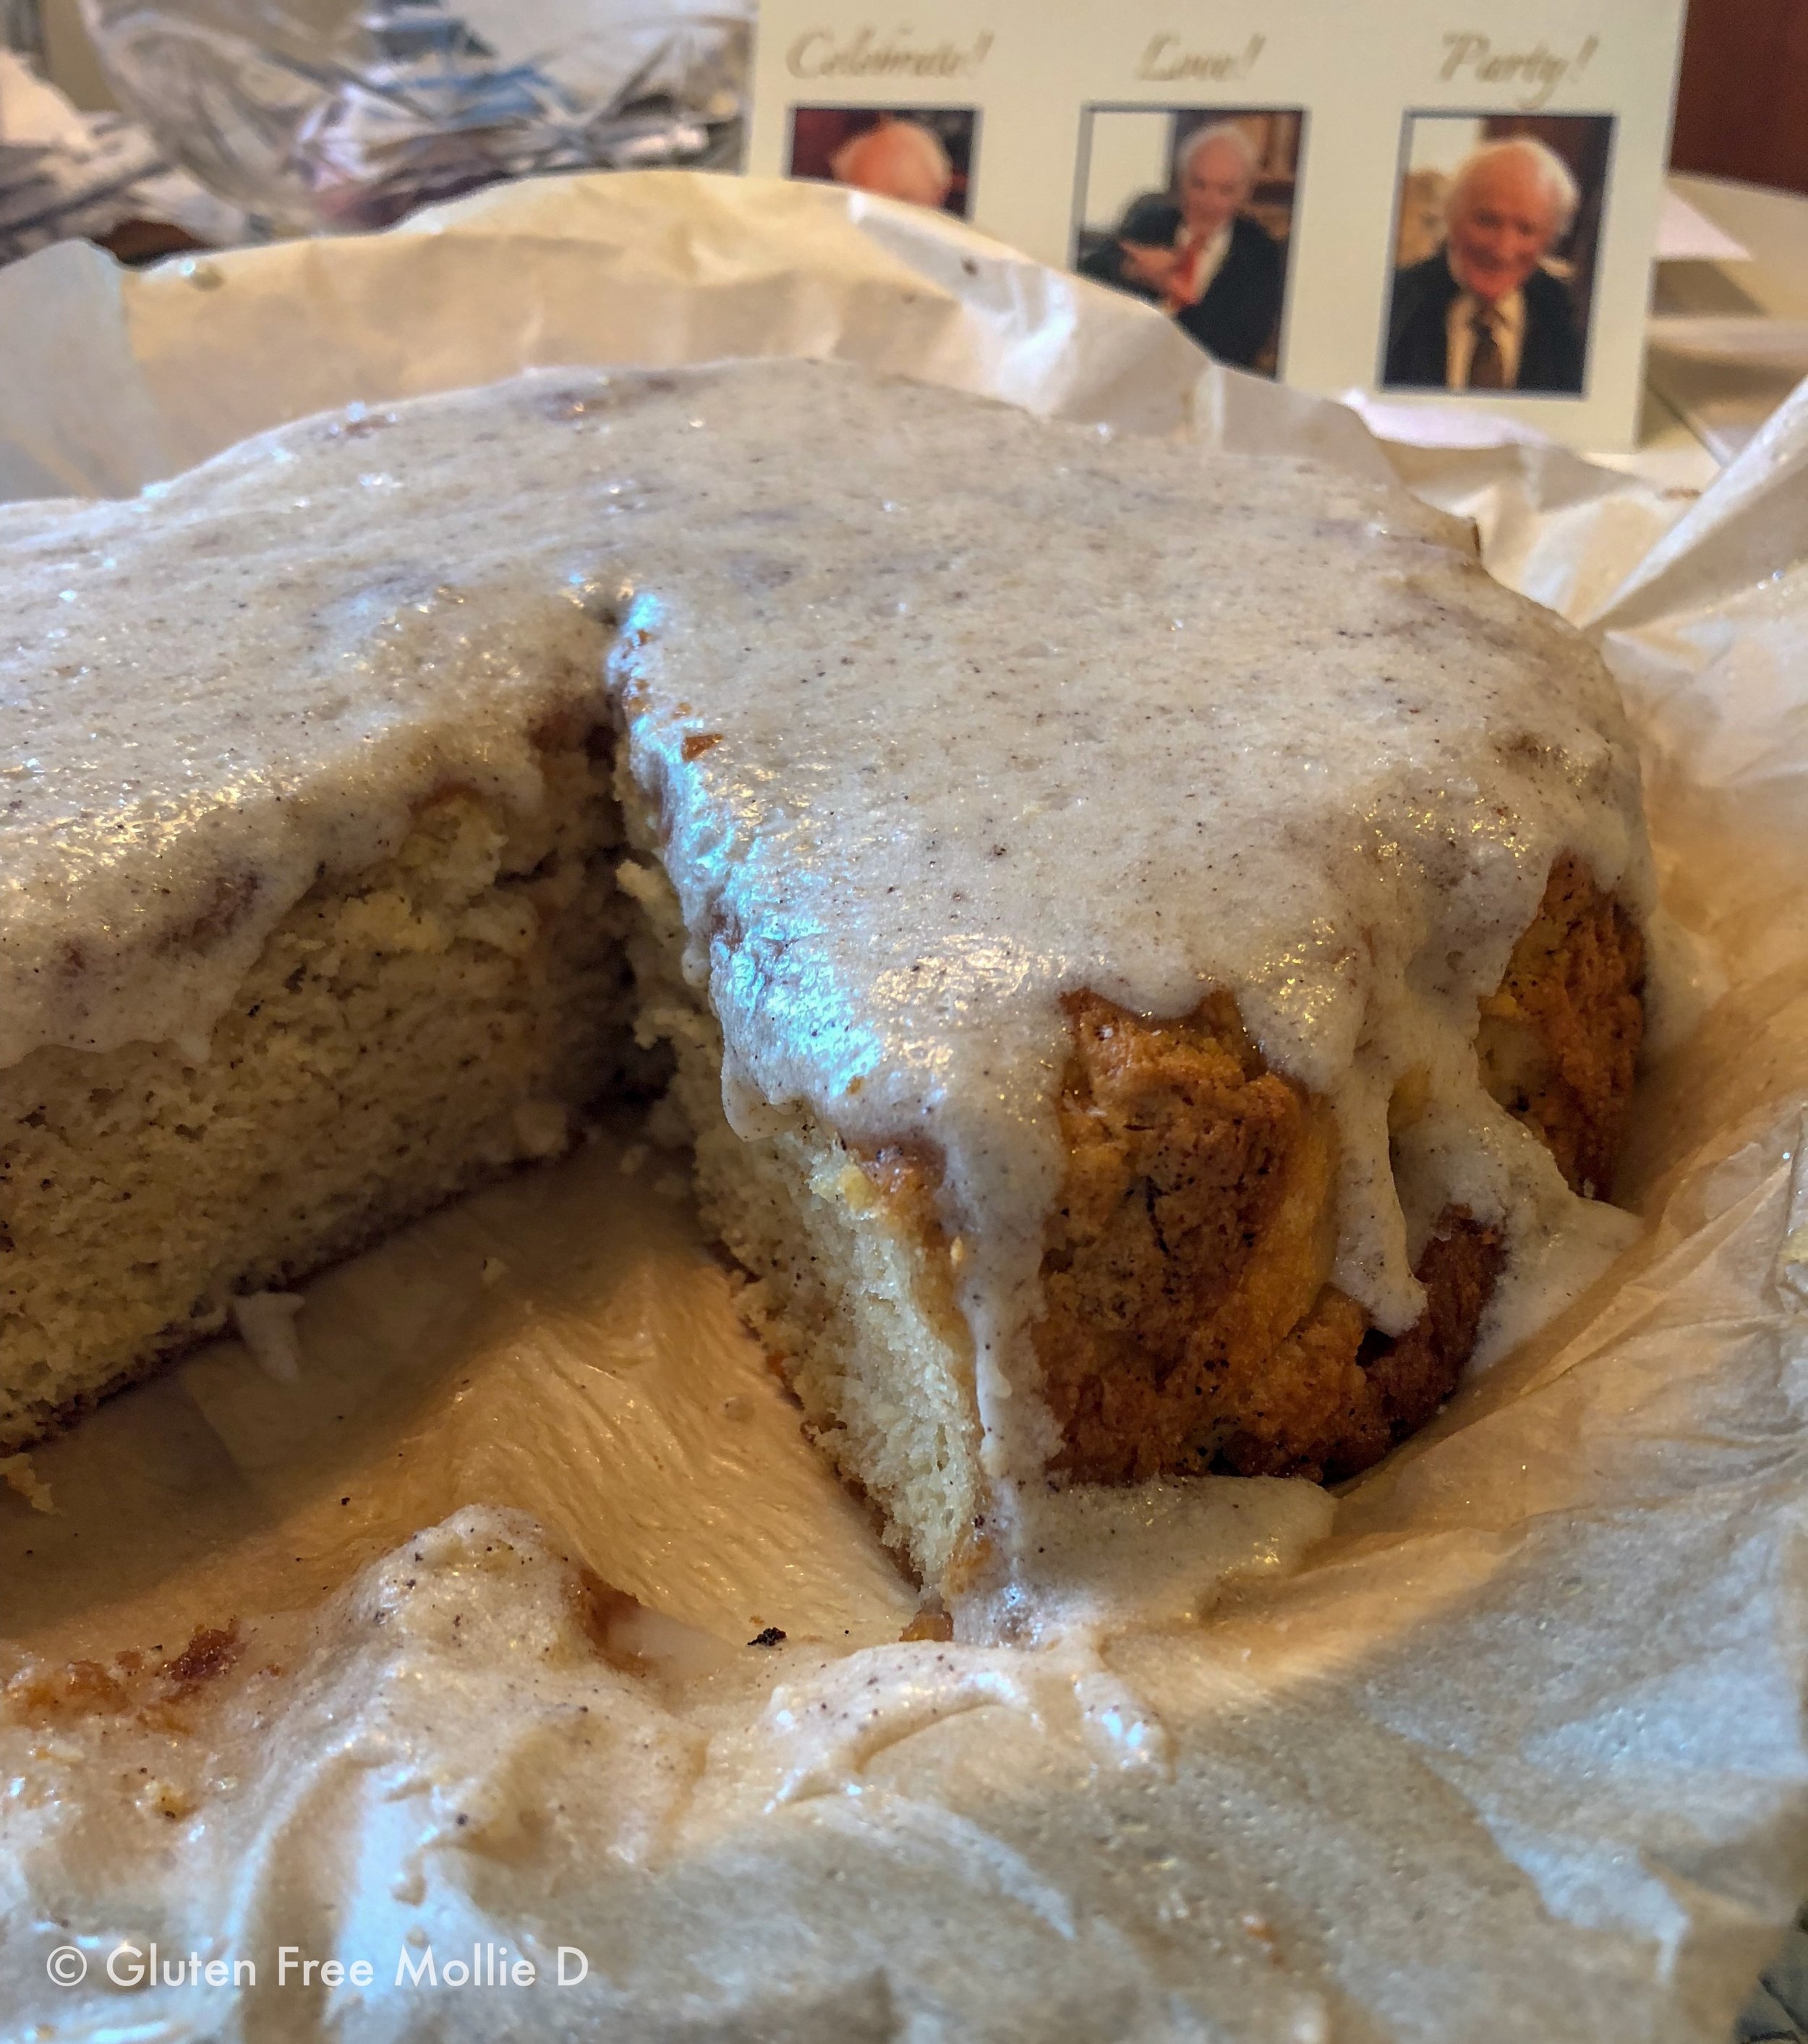  Buttermilk cake was a big hit - again! 